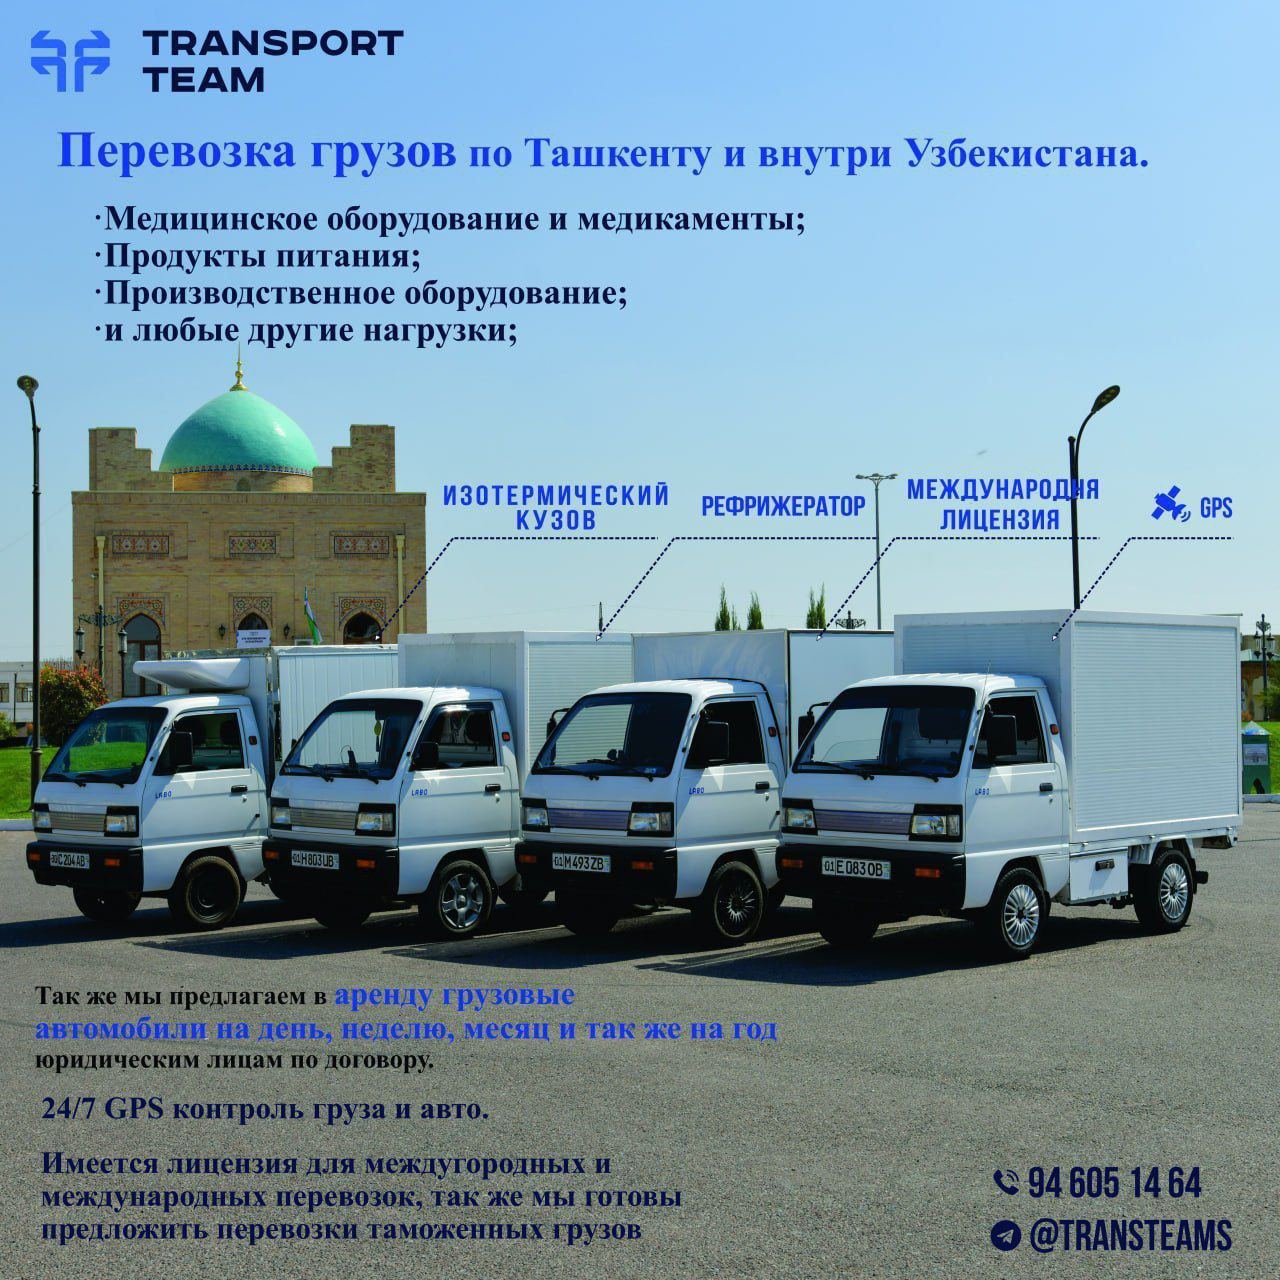 “Transport Team